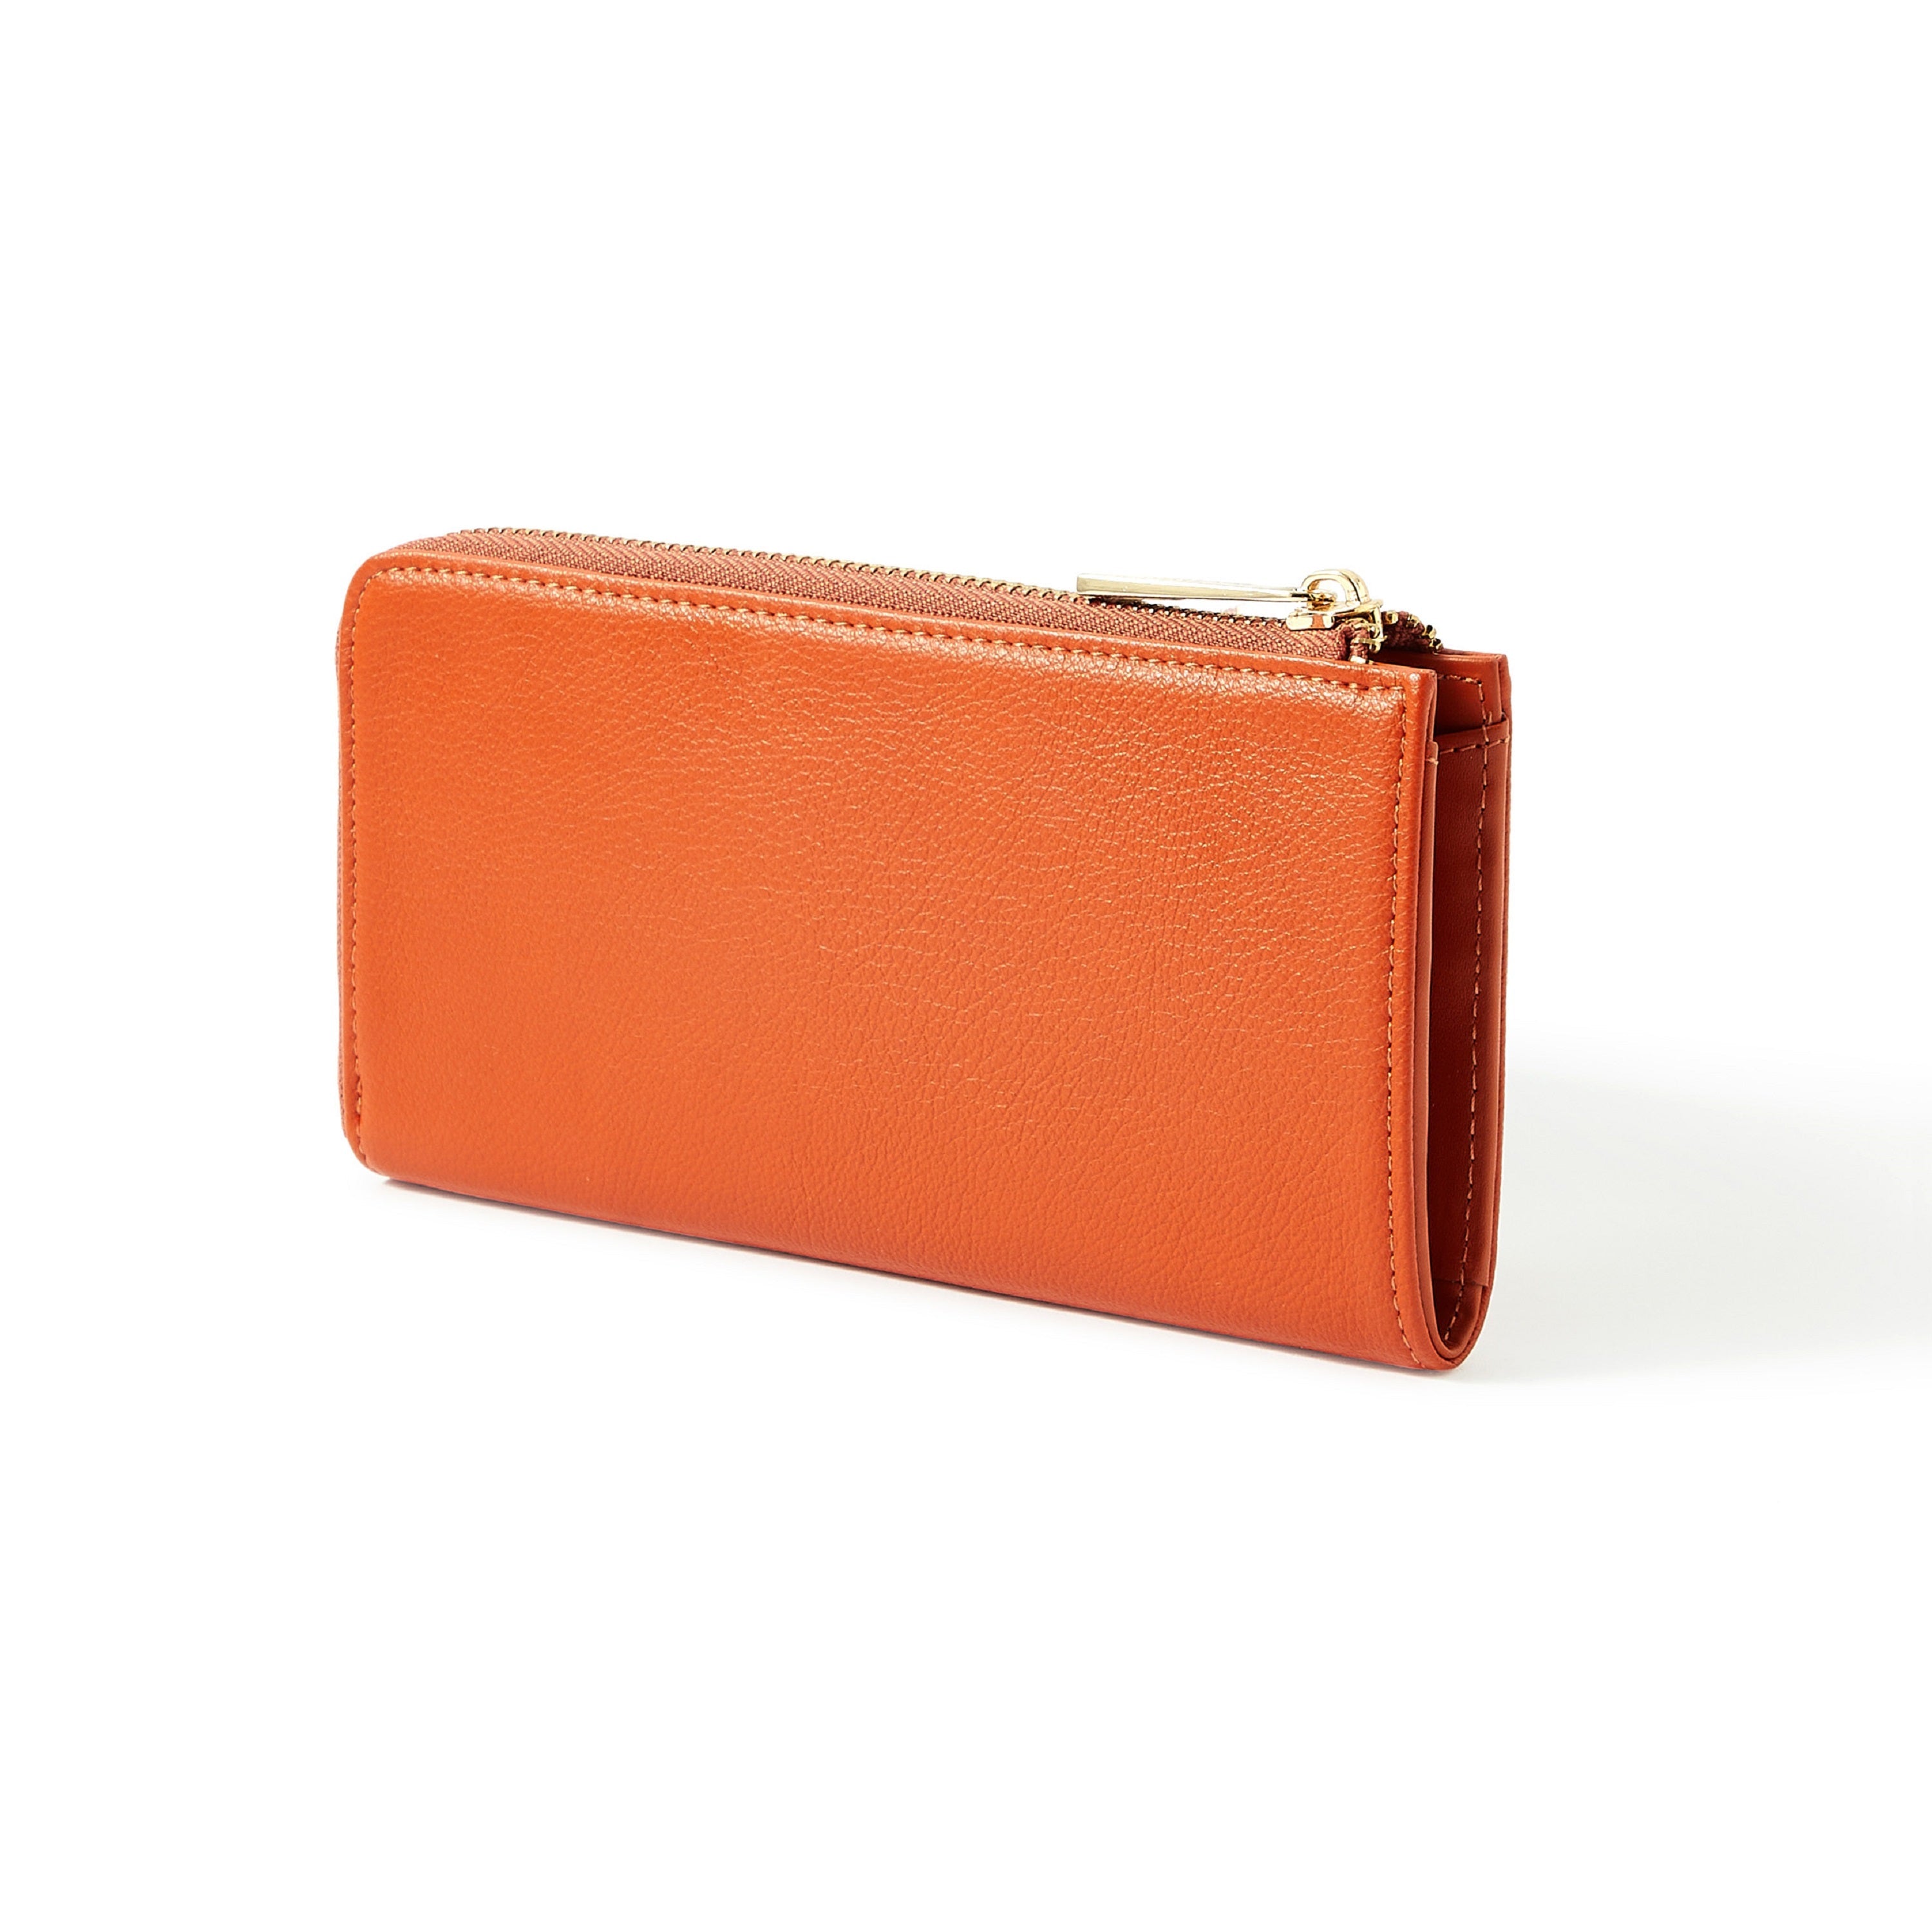 Accessorize London Women's Faux Leather Orange Large Zip Around Wallet - Accessorize India